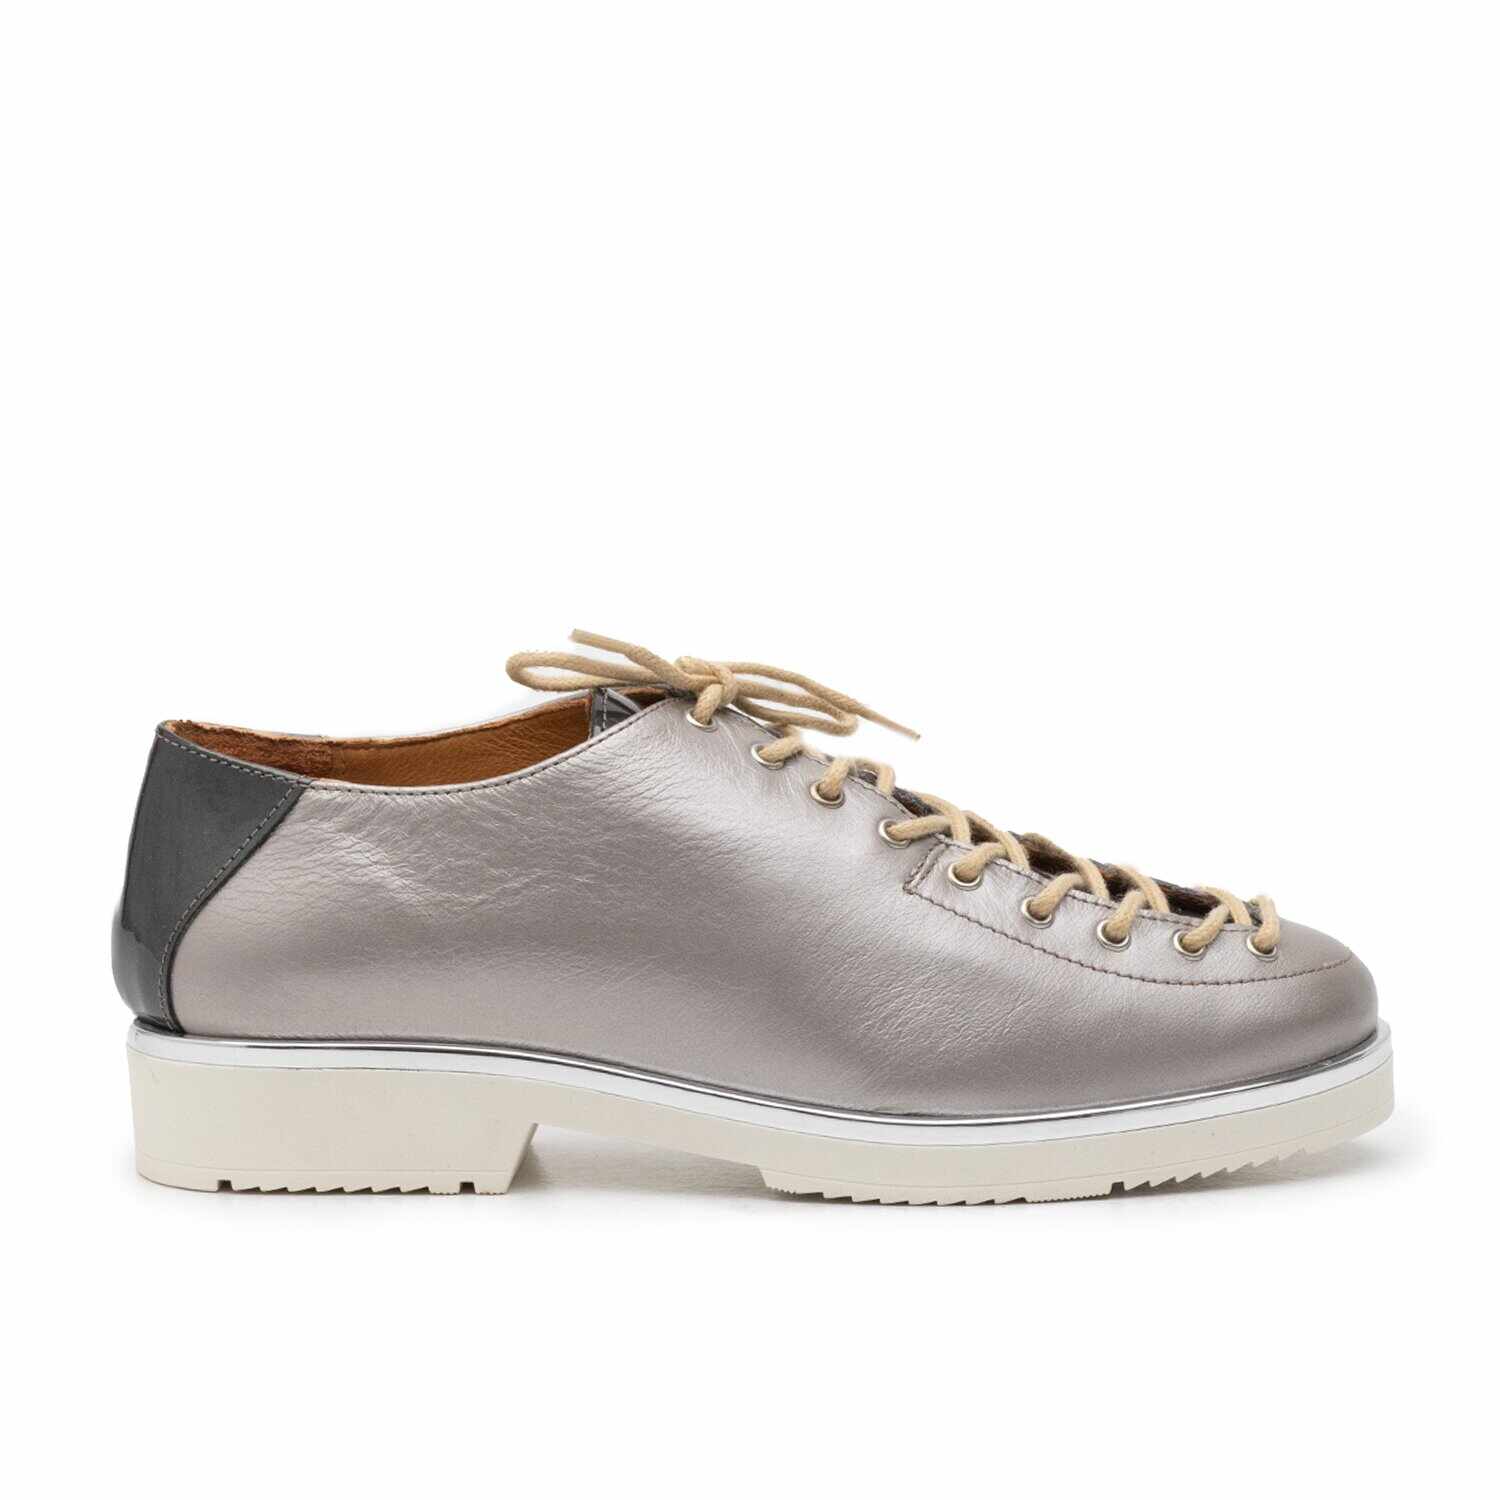 Pantofi casual dama cu siret pana in varf din piele naturala, Leofex- 194 -1 argintiu sidef box